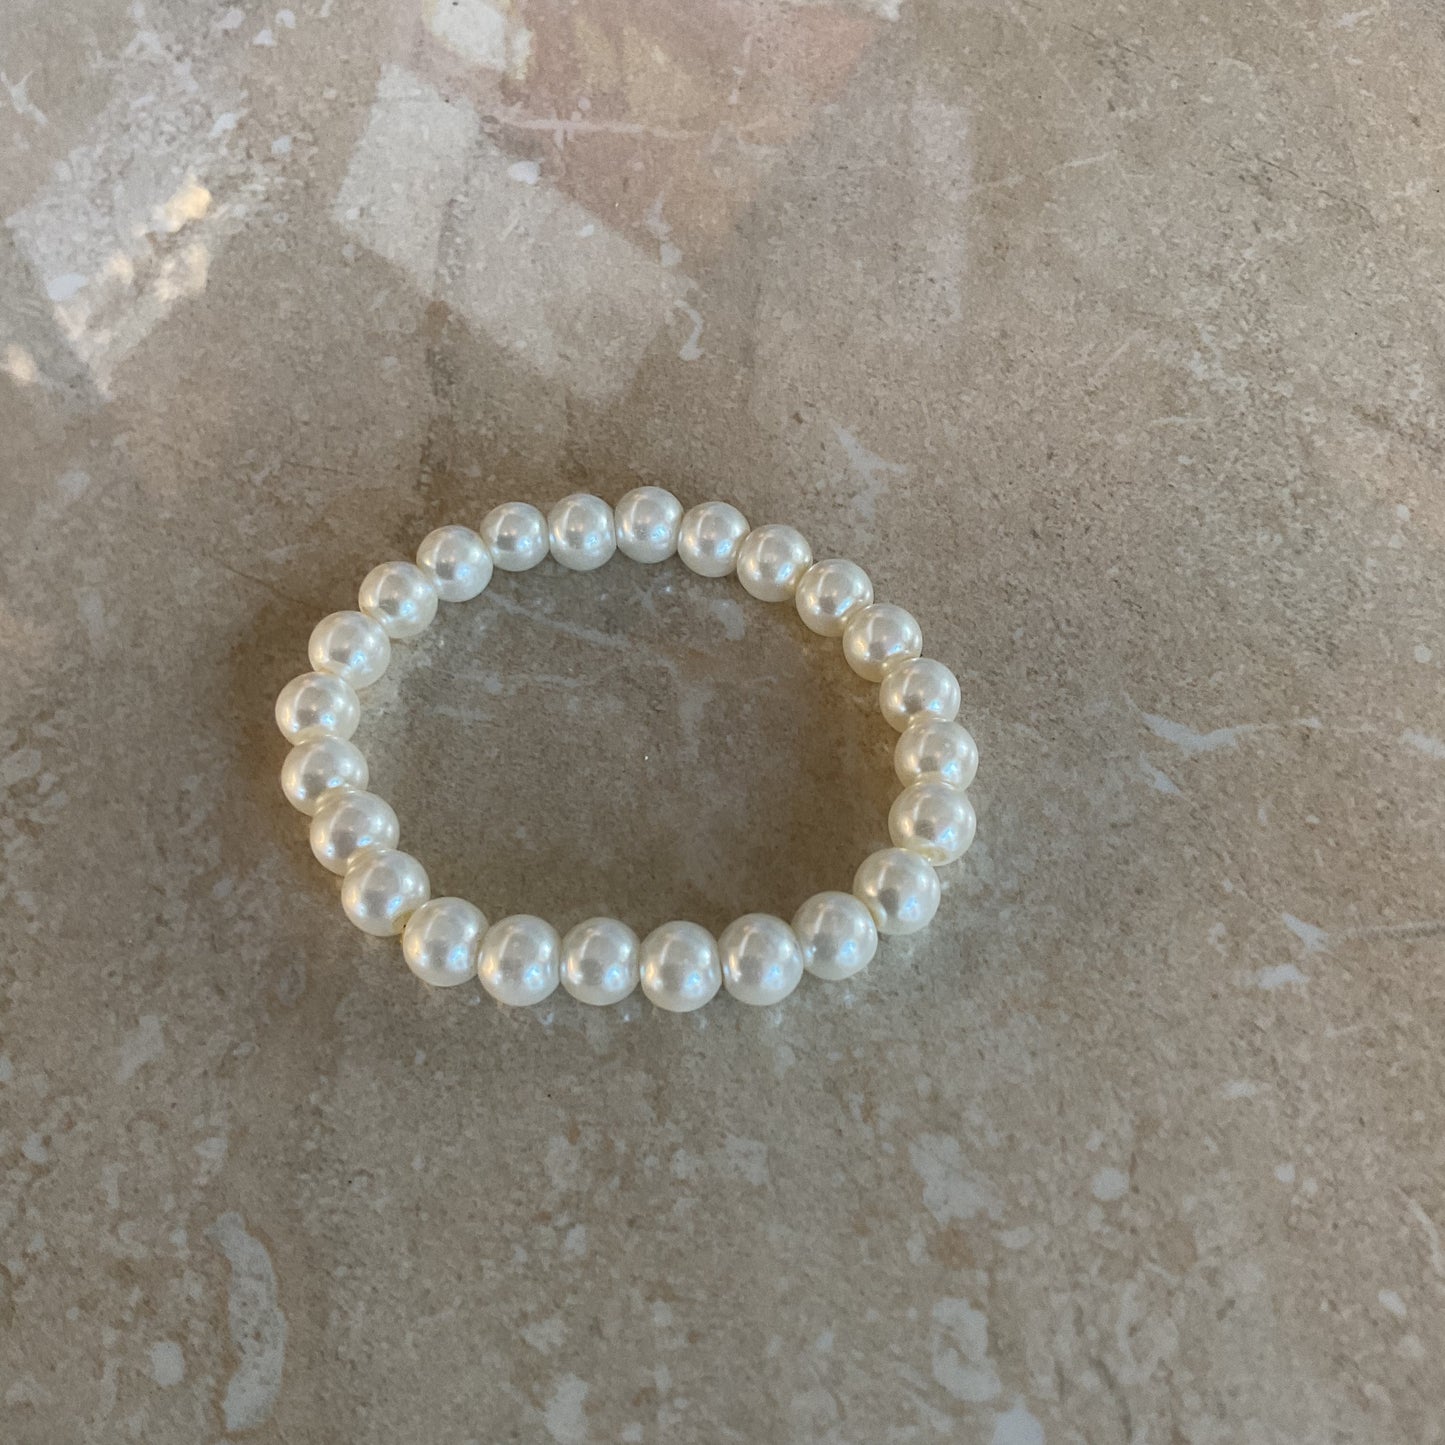 Vintage Glass Pearls Women’s Stretch Bracelet Size Medium 2 1/2 inches